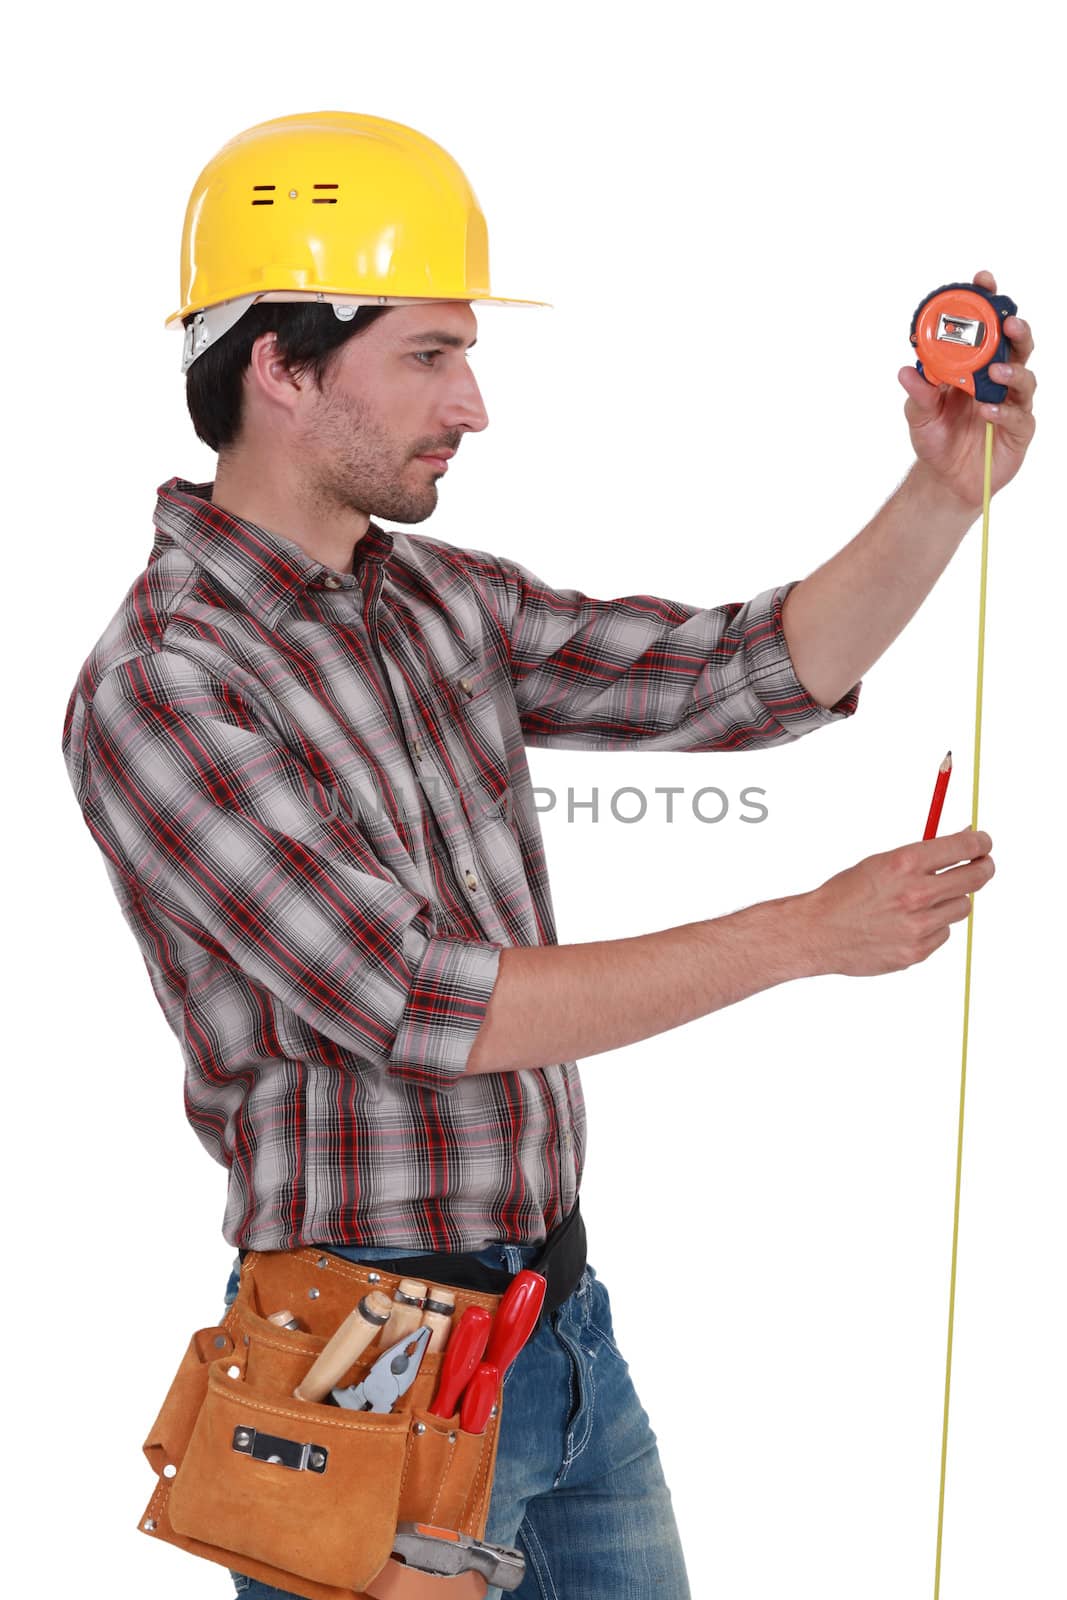 Man measuring using tape measure by phovoir